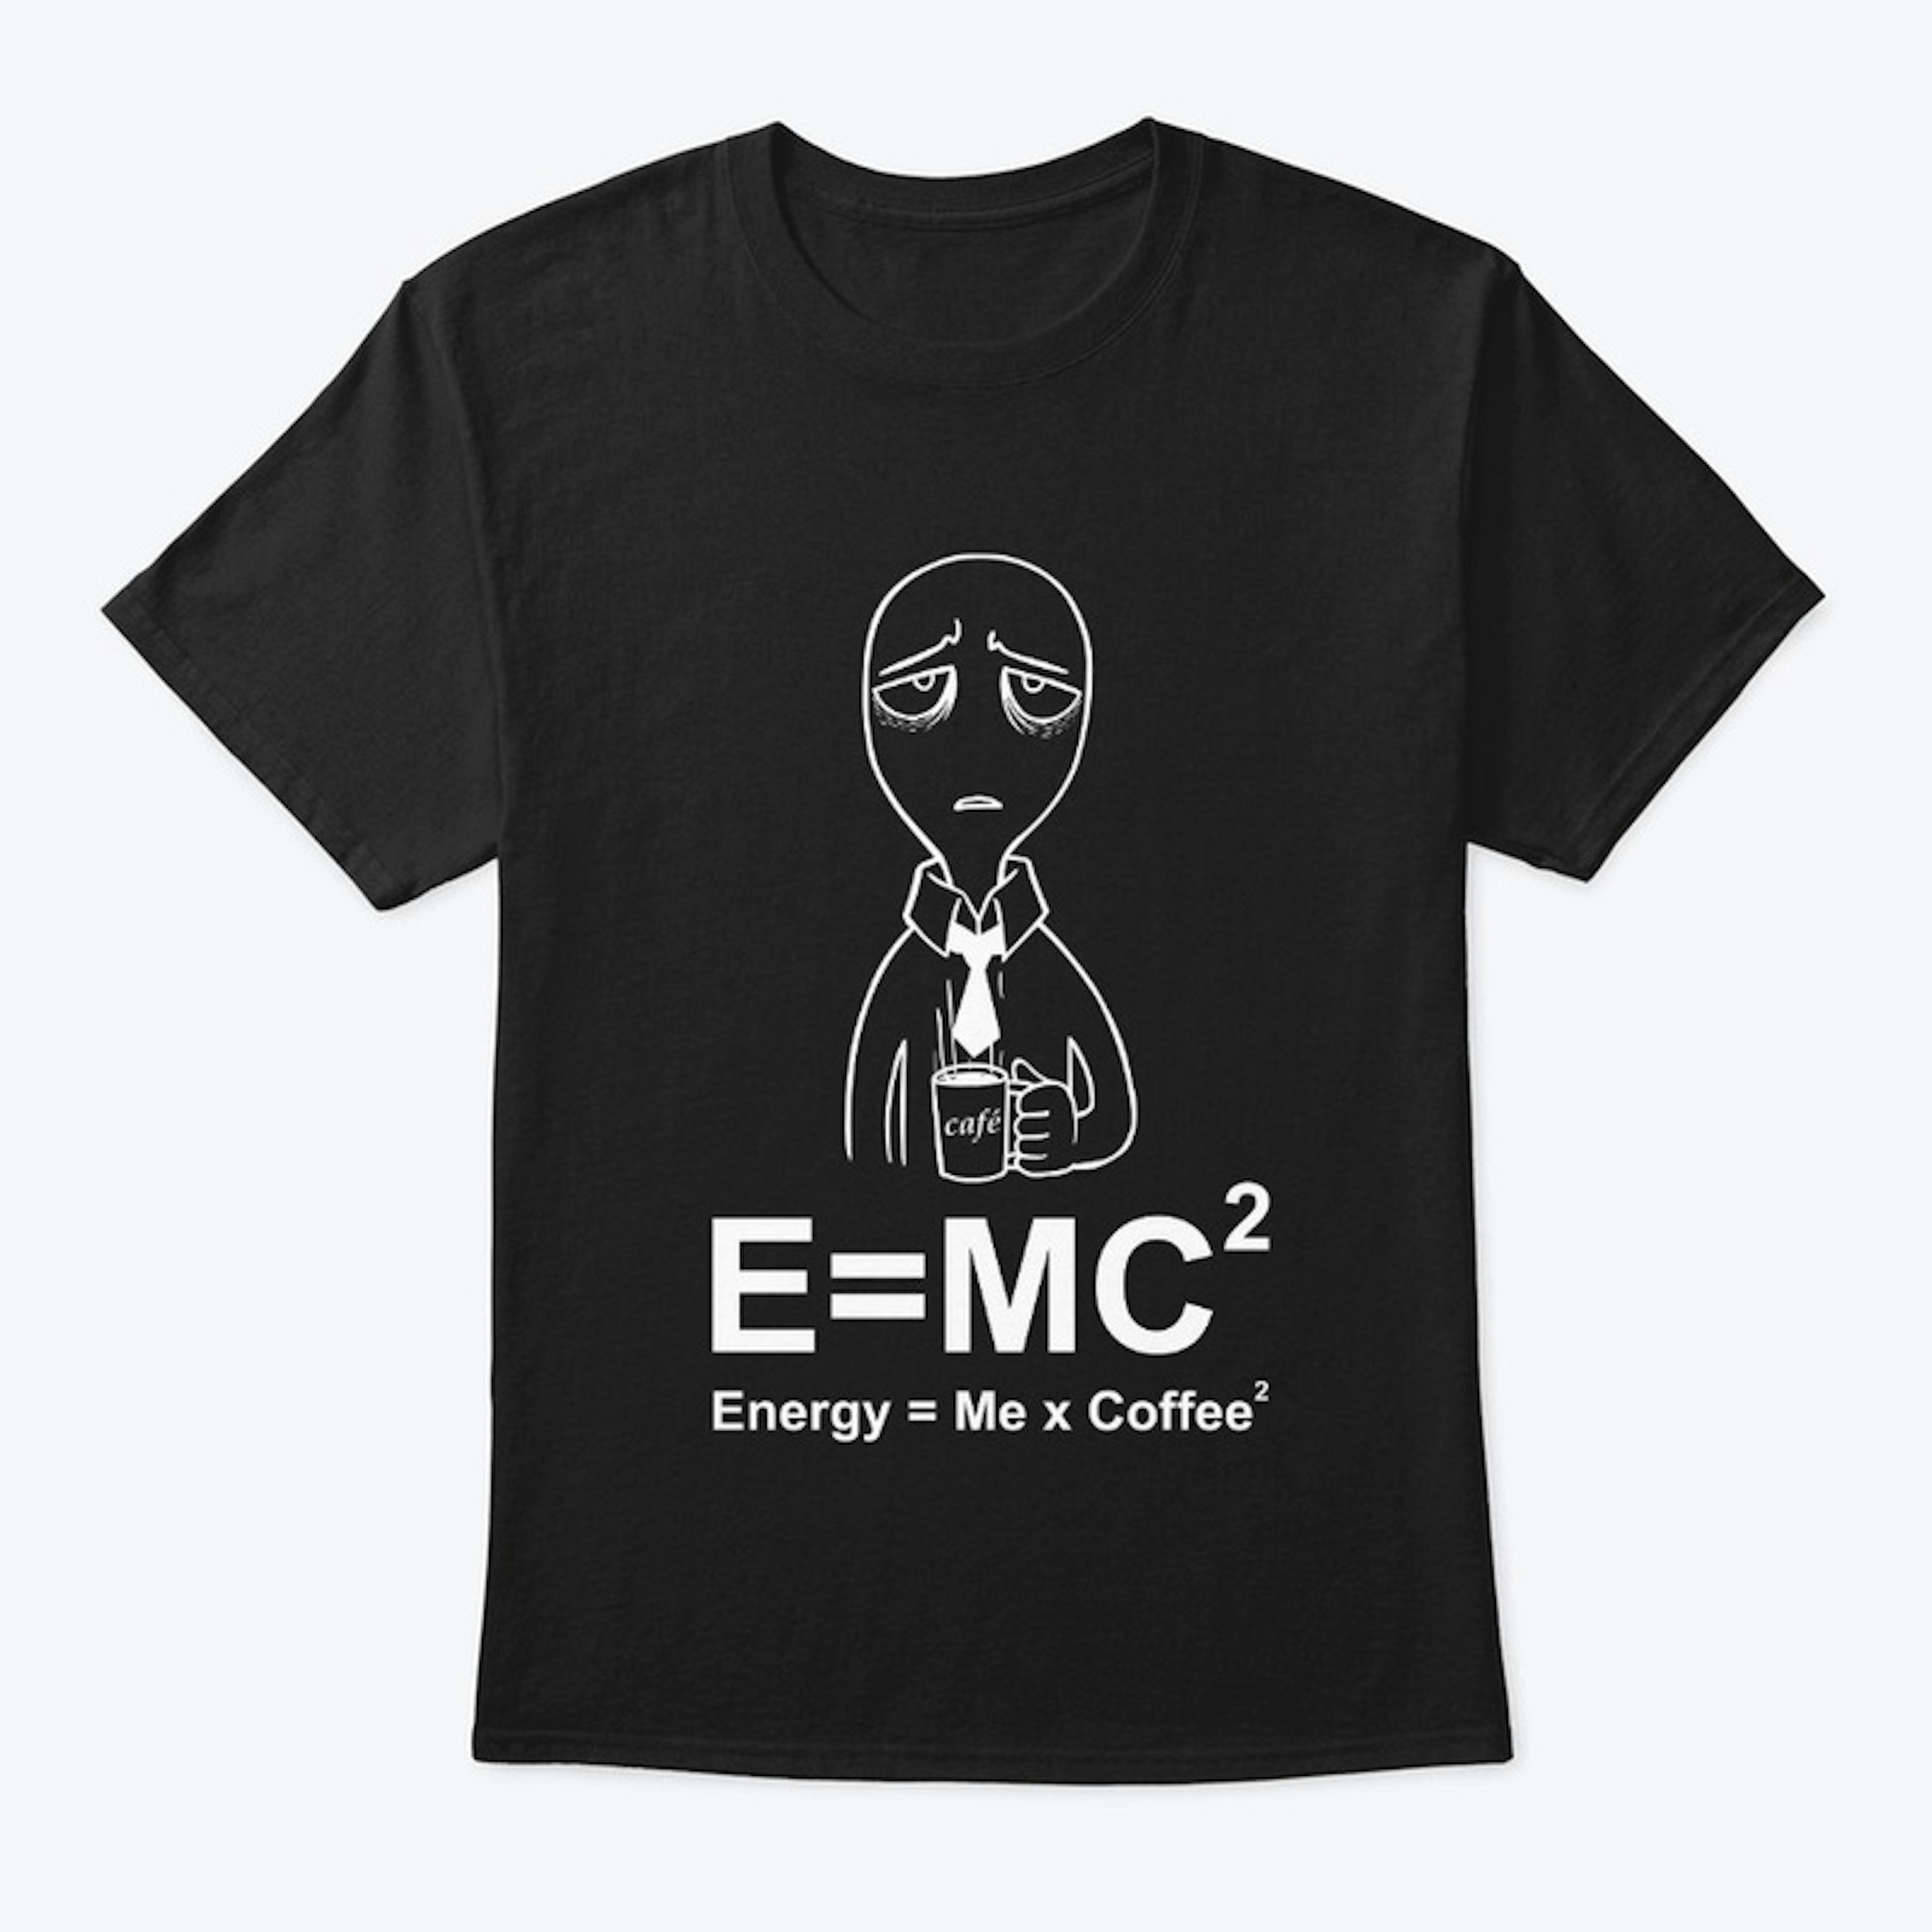 Energy=Me x Coffee²